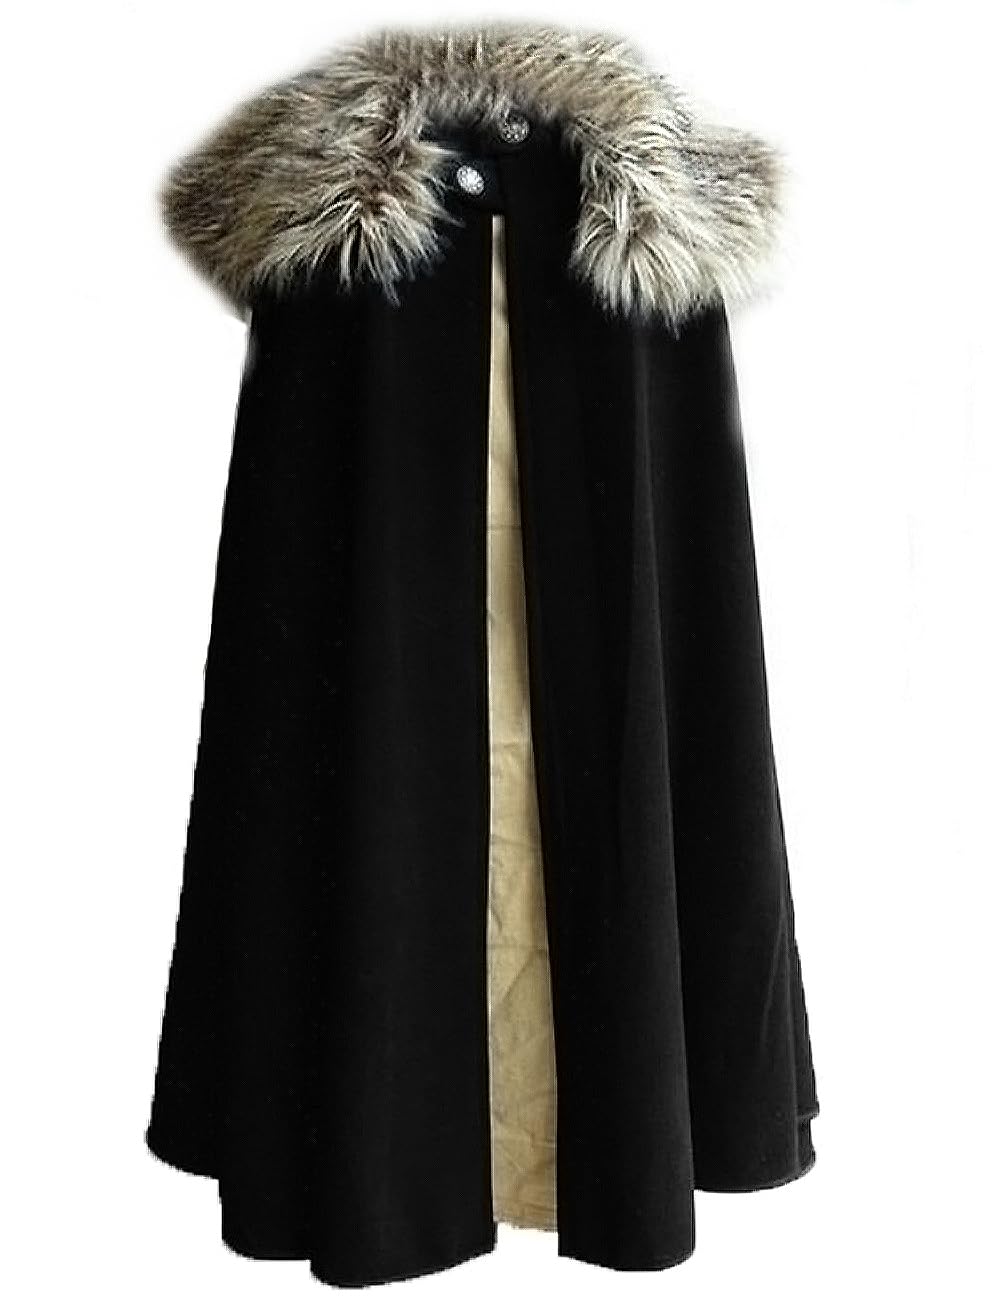 MSOrient Mens Medieval Viking Cloak Fur Cape Cosplay Costume Renaissance King With Fur Cloak Halloween Costume Small Black